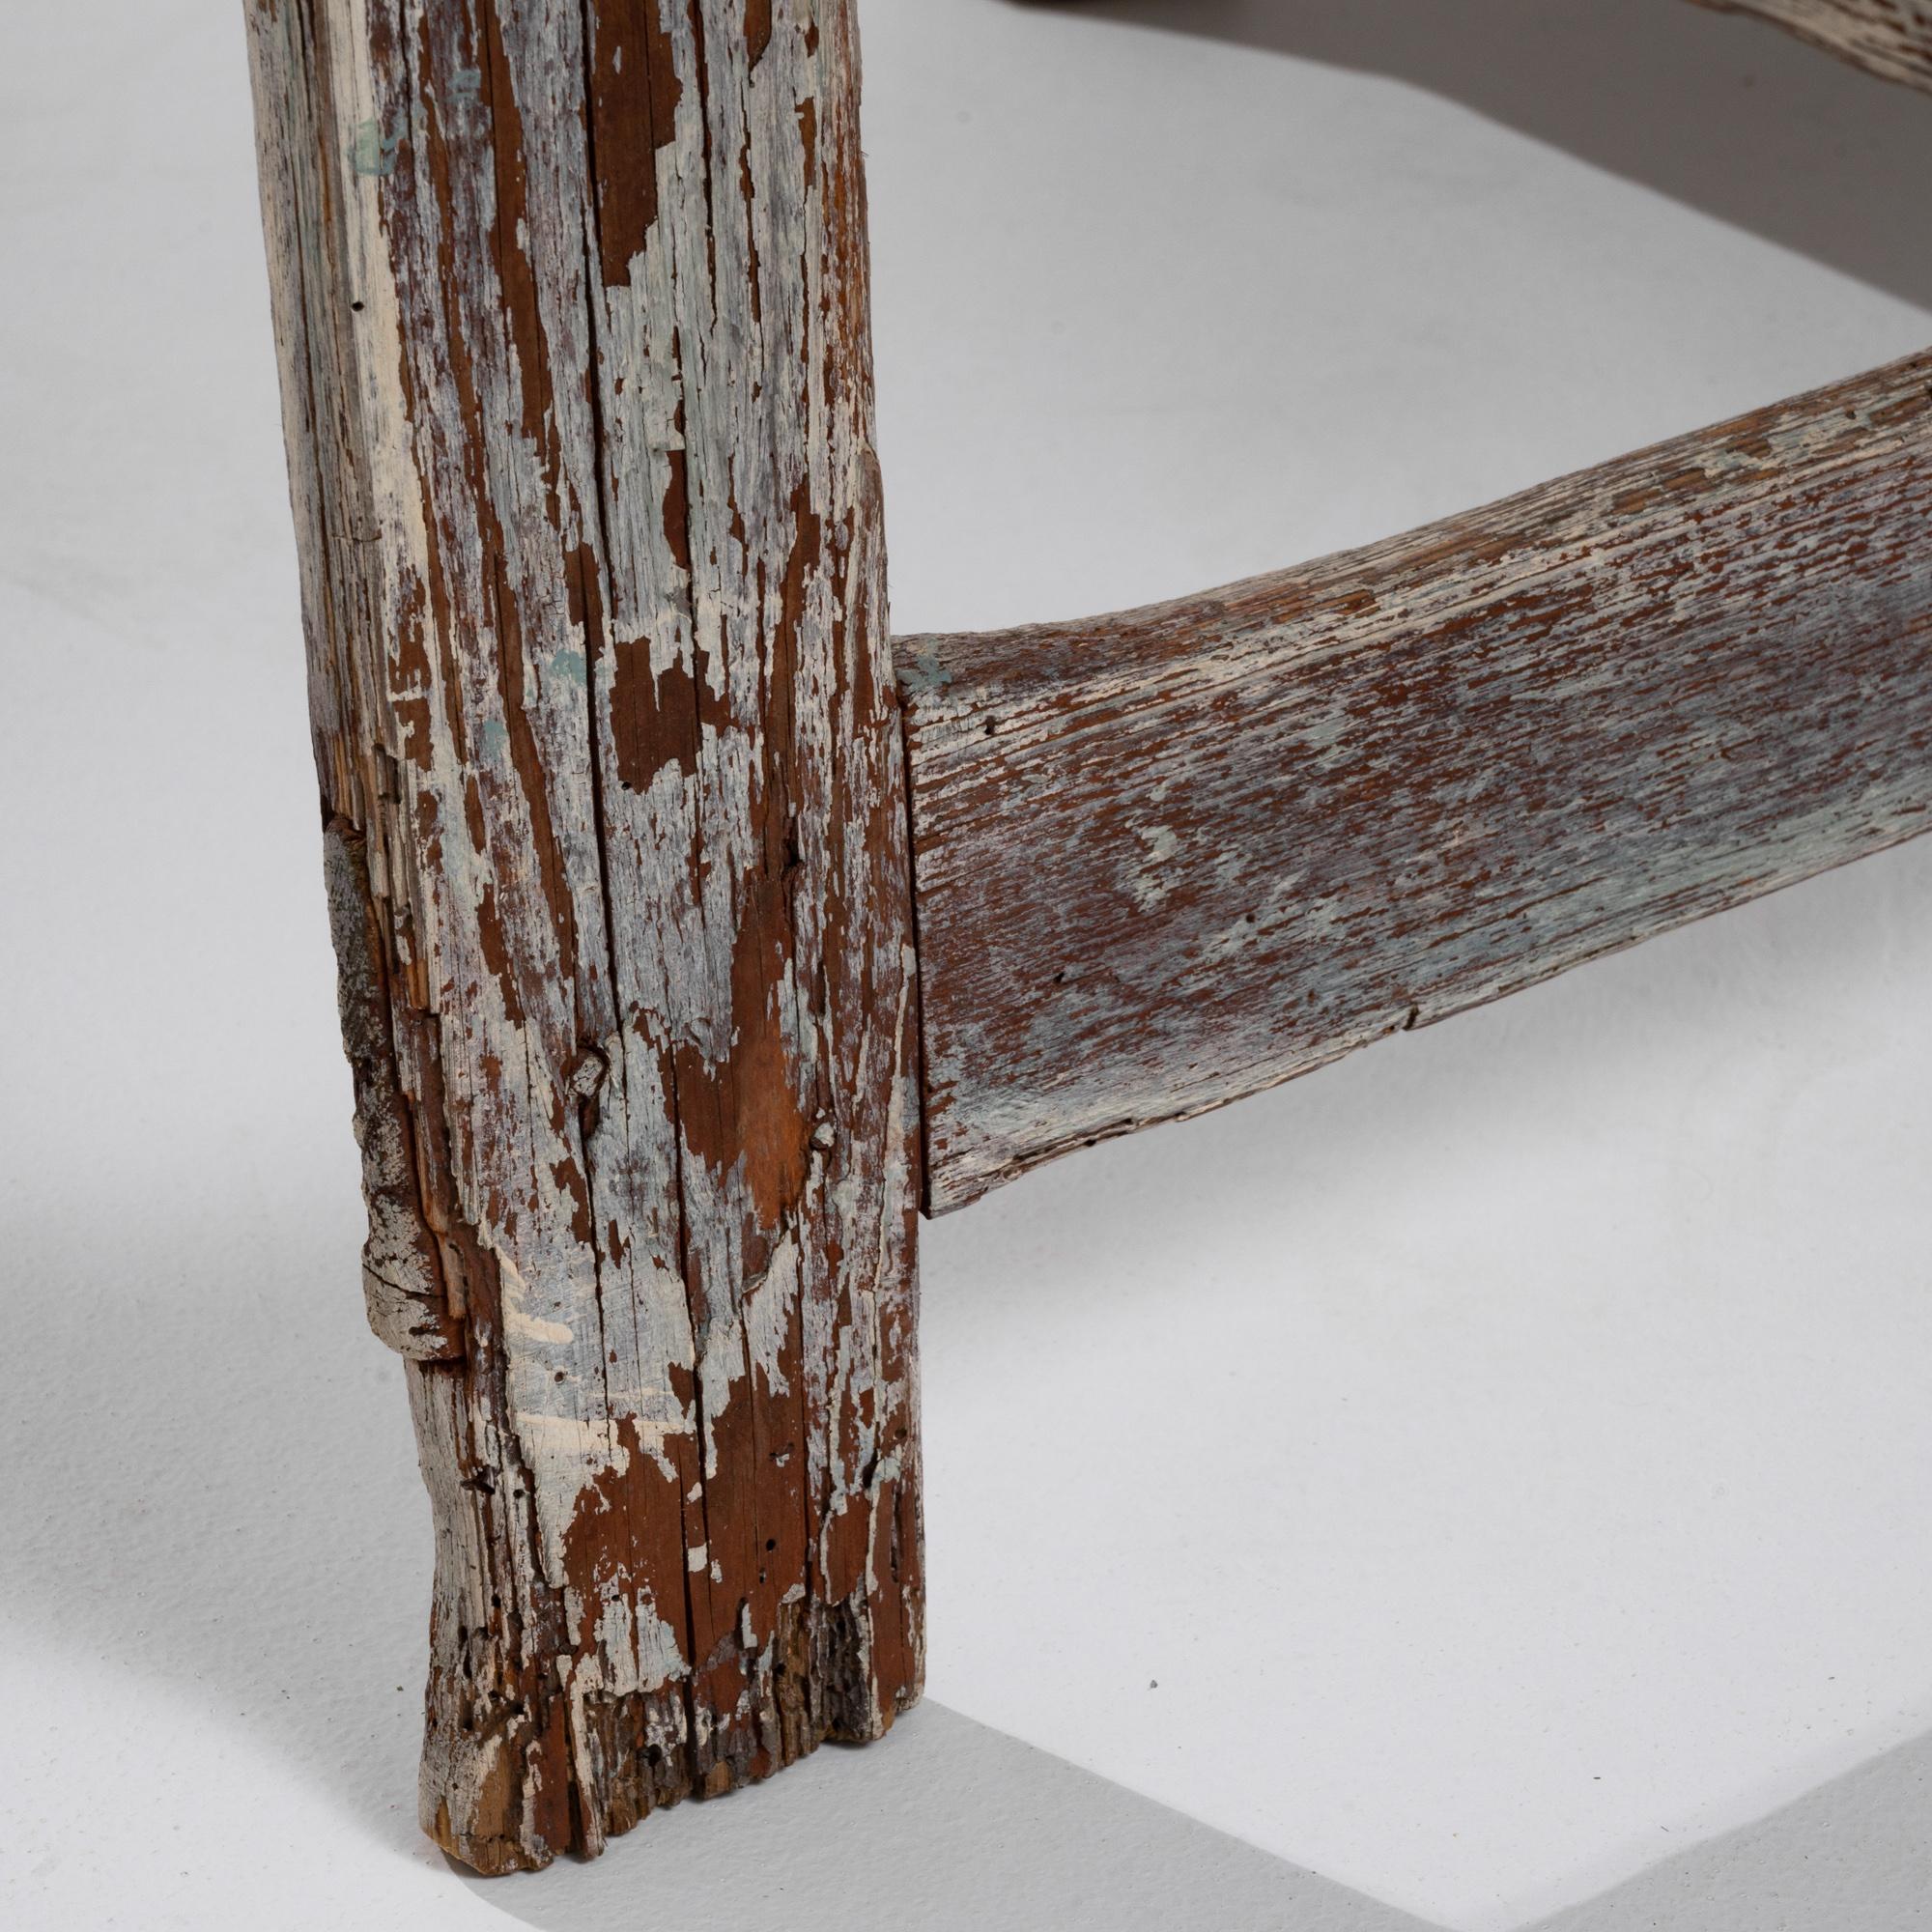 19th Century Scandinavian Wooden Gate Leg Table For Sale 2